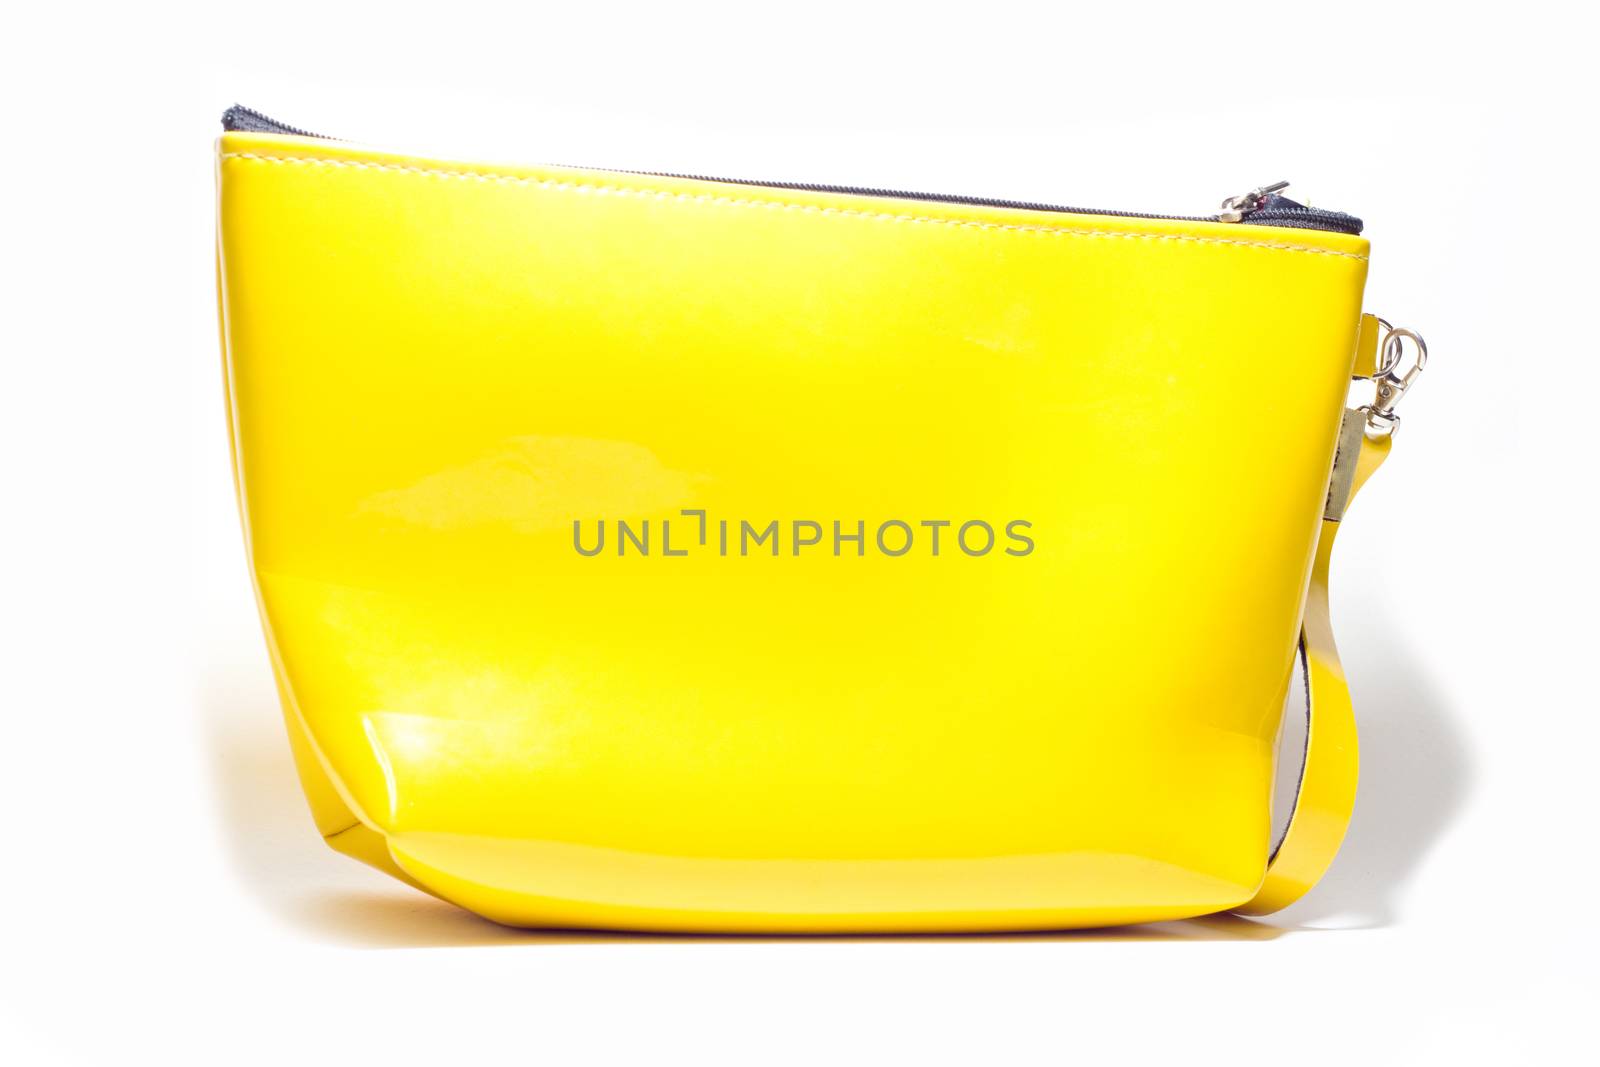 yellow handbag on a white background